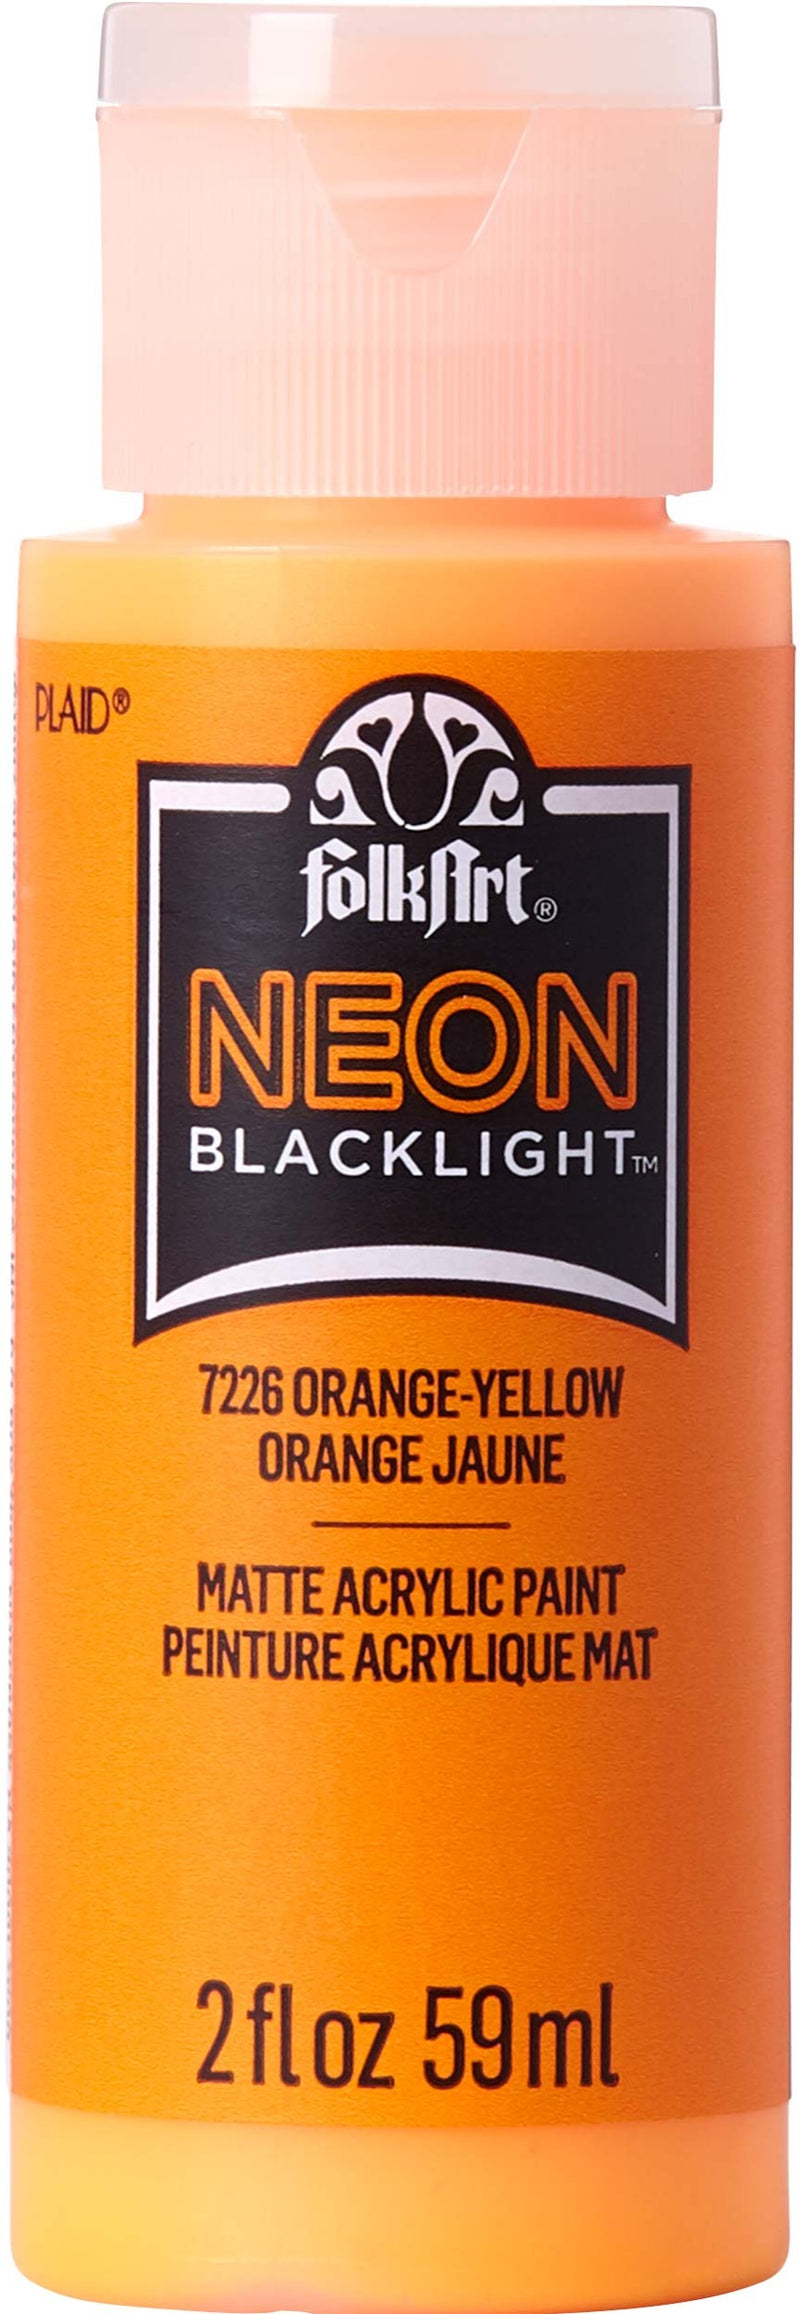 Folk Art Acrylic Paint Neon Blacklight 2oz/59ml